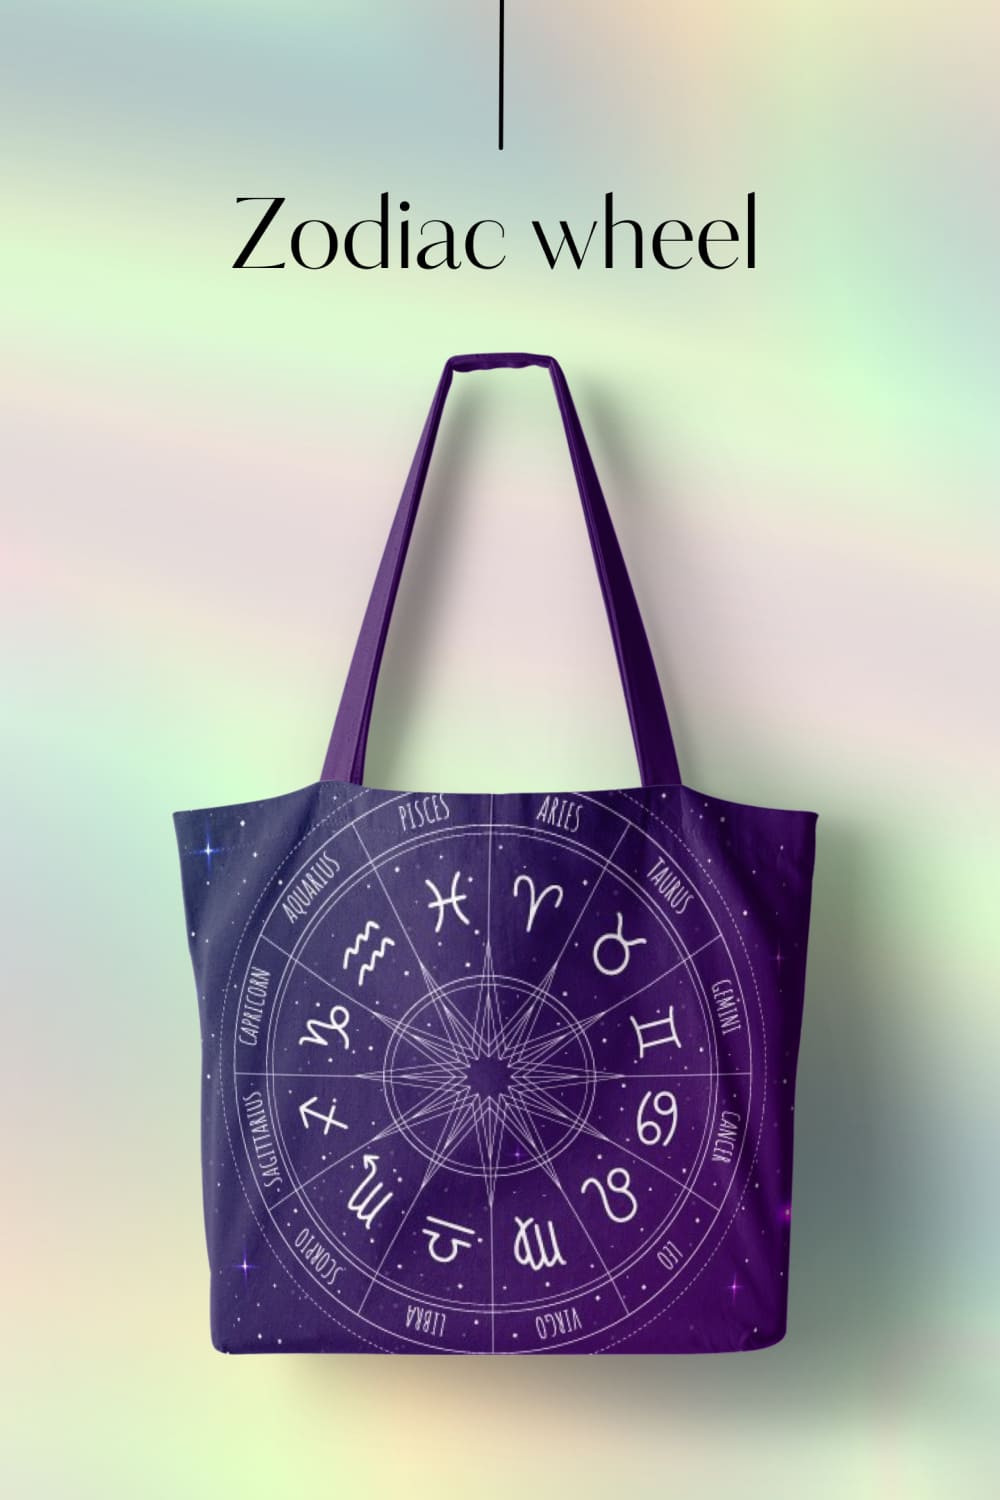 zodiac wheel mystery collection 1 857